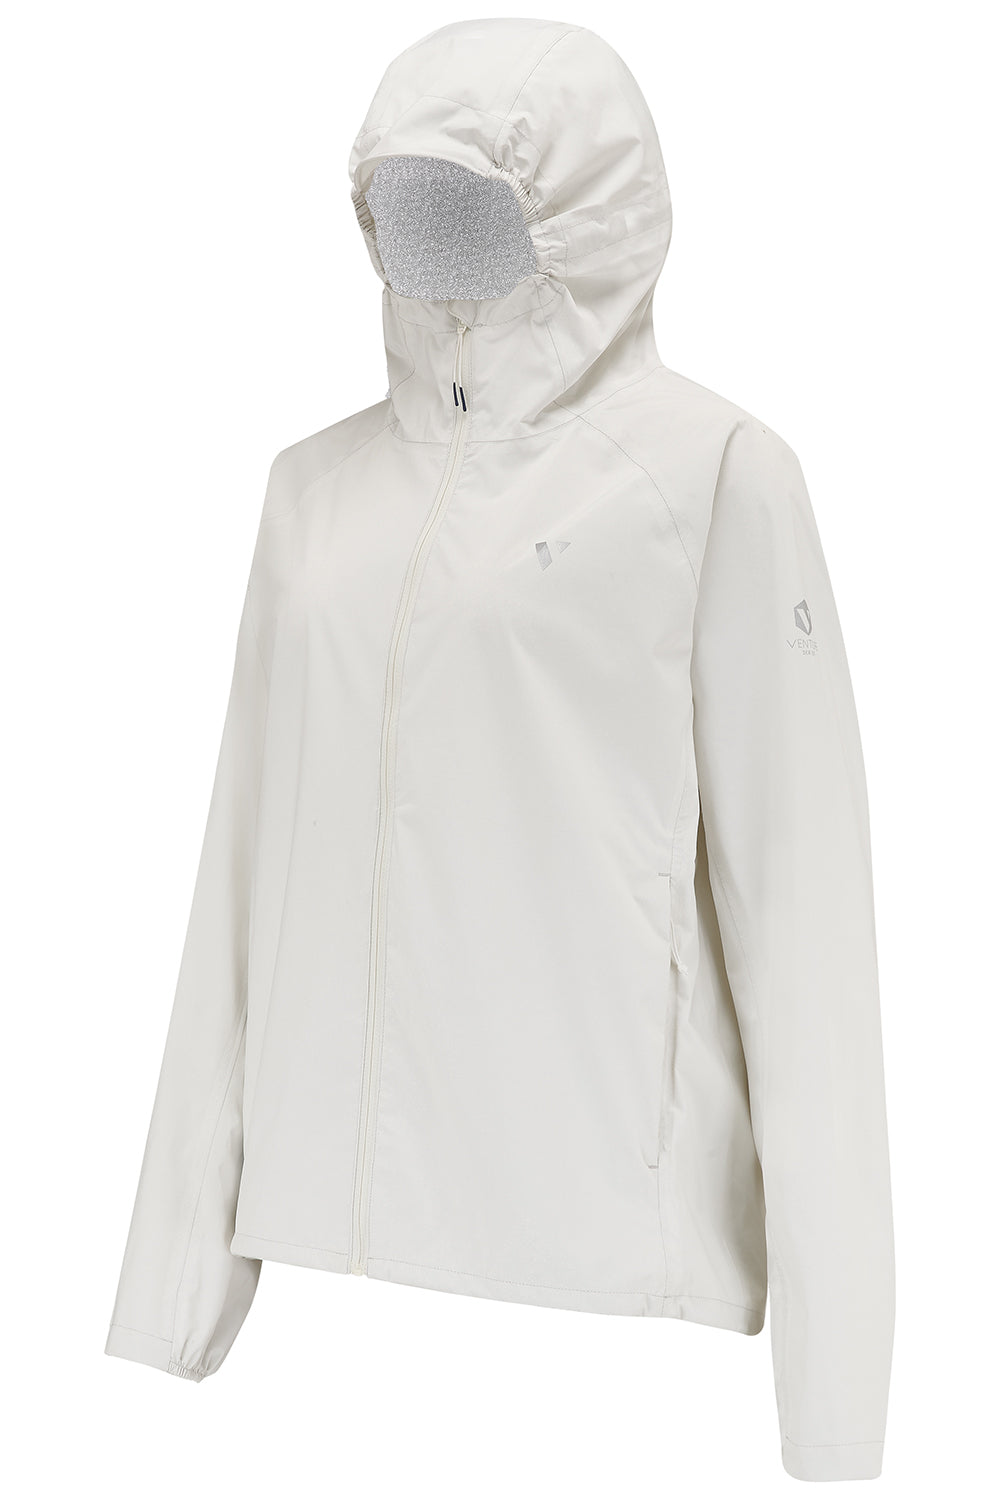 Ultralite - Women's Running Jacket - White